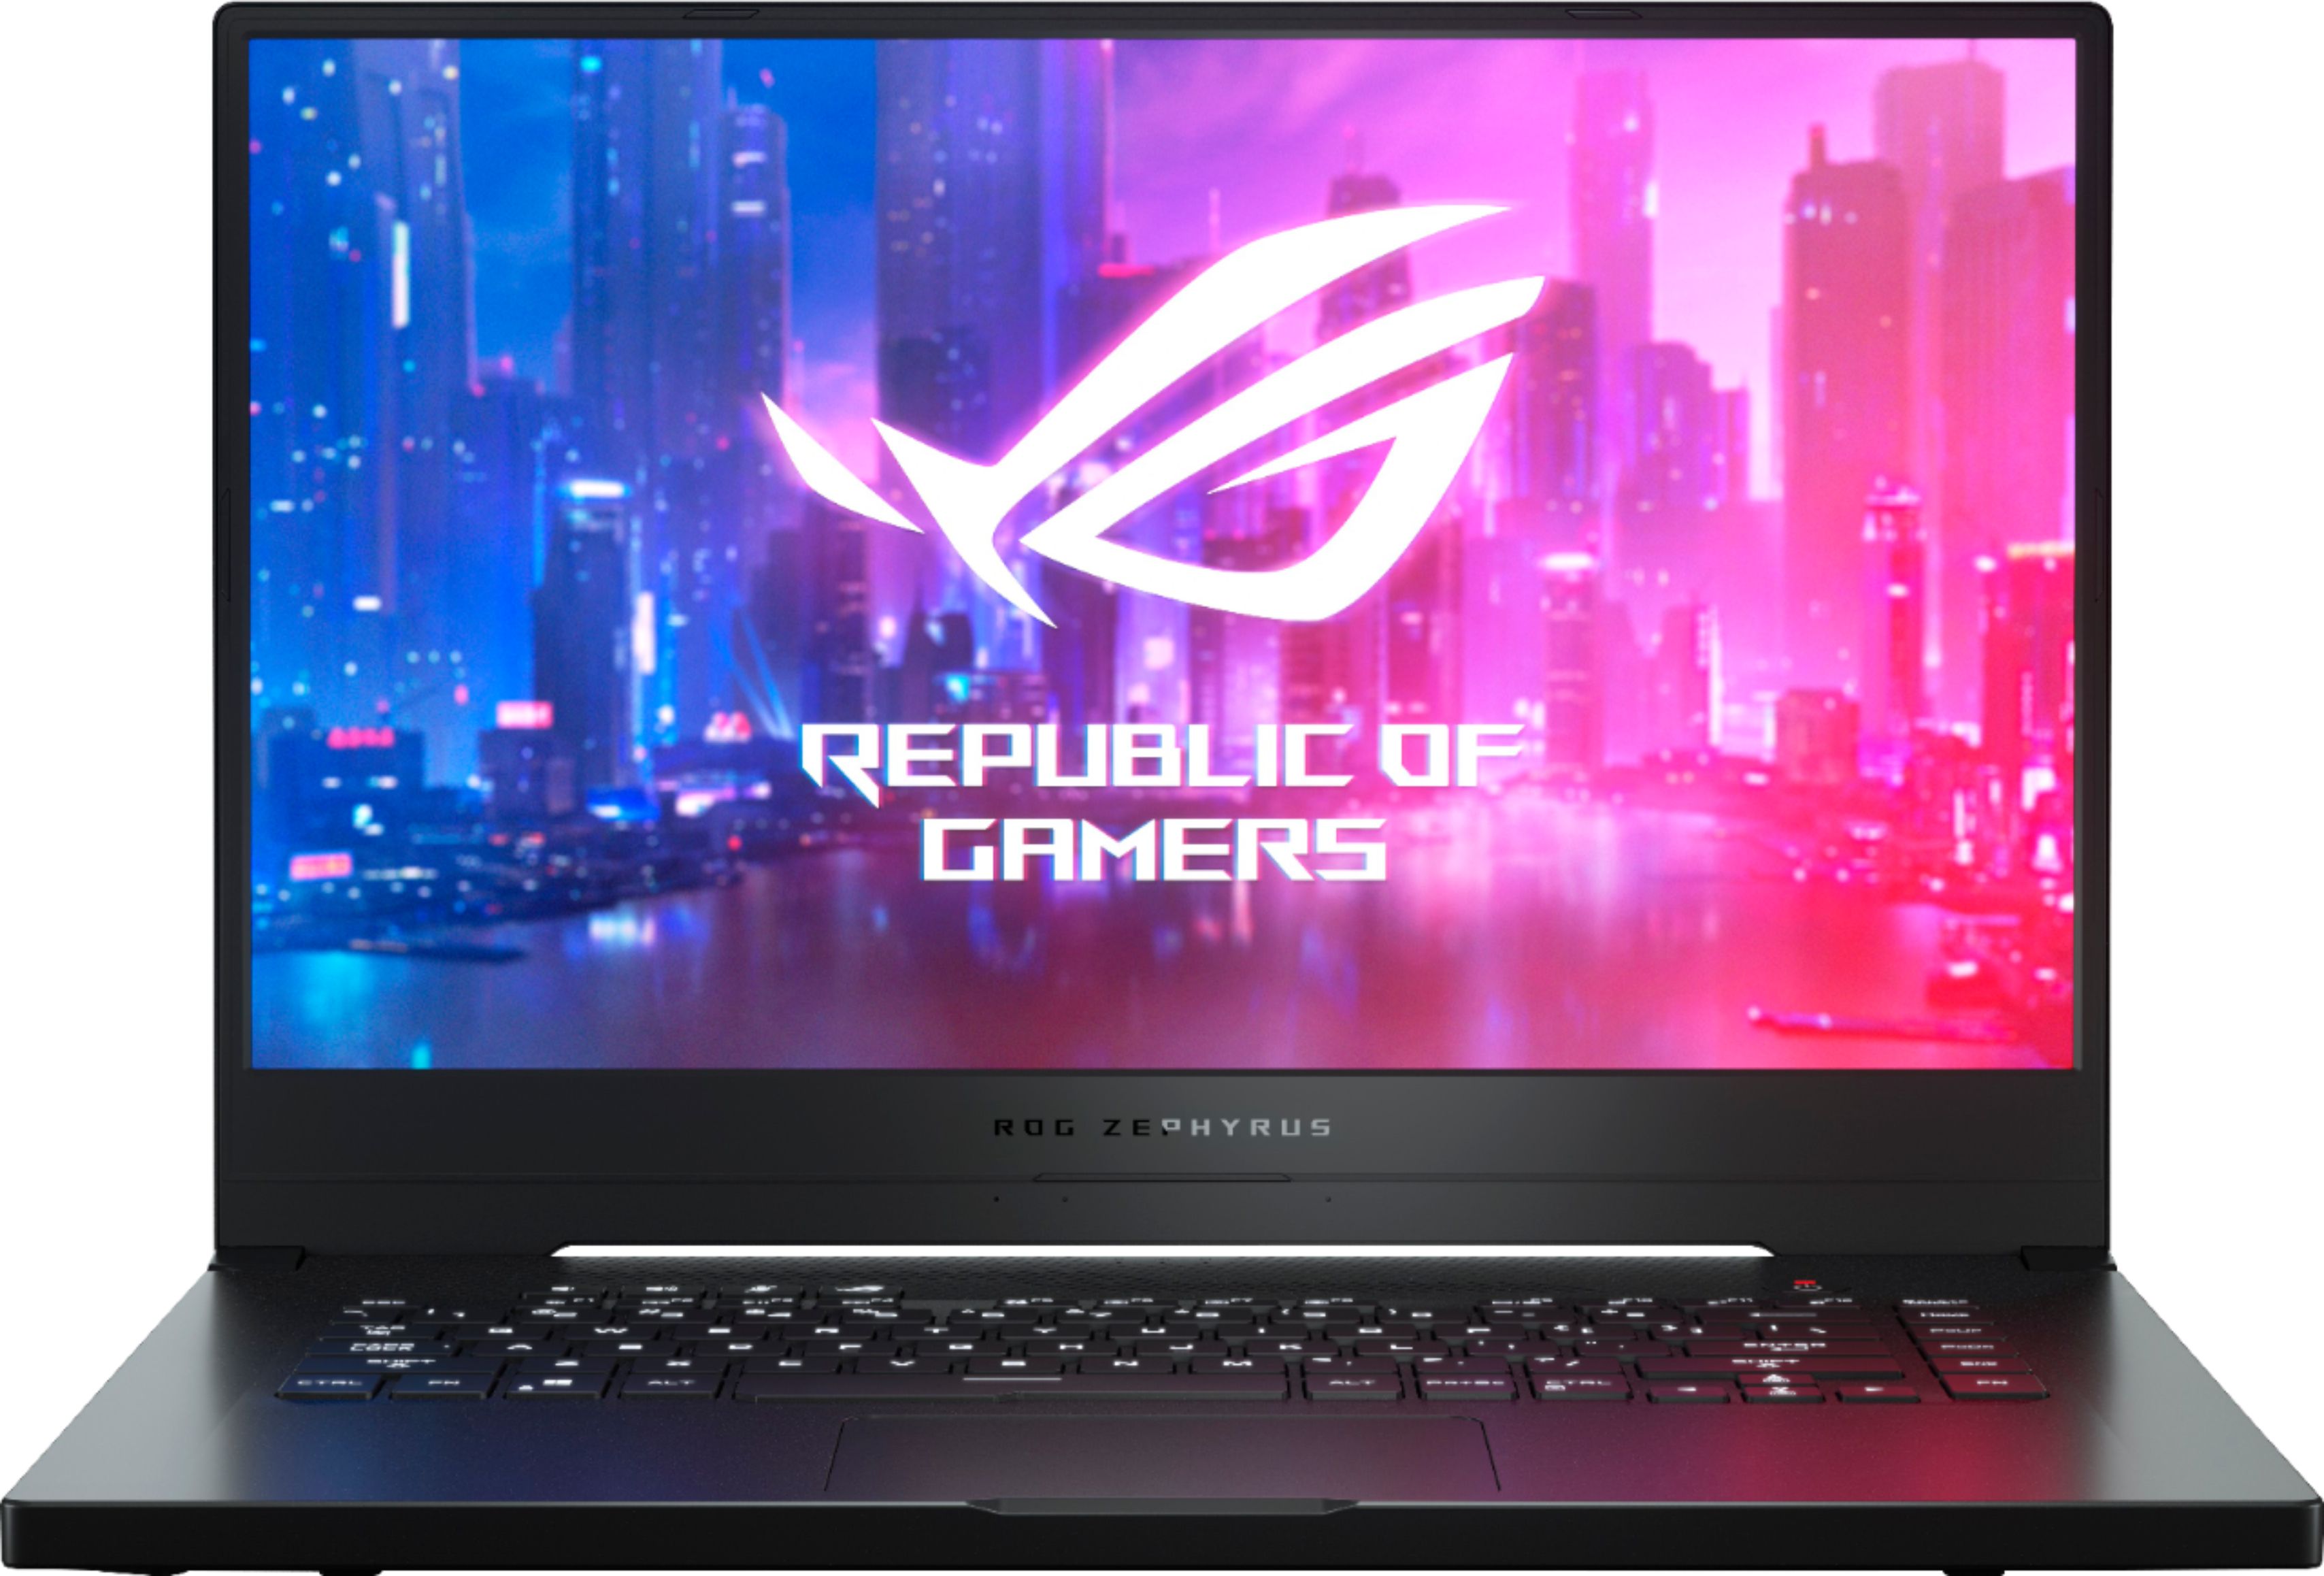 ASUS - ROG Zephyrus G 15.6" Gaming Laptop - AMD Ryzen 7 - 16GB Memory - NVIDIA GeForce GTX 1660 Ti Max-Q - 512GB SSD - Metalic Hairline Black